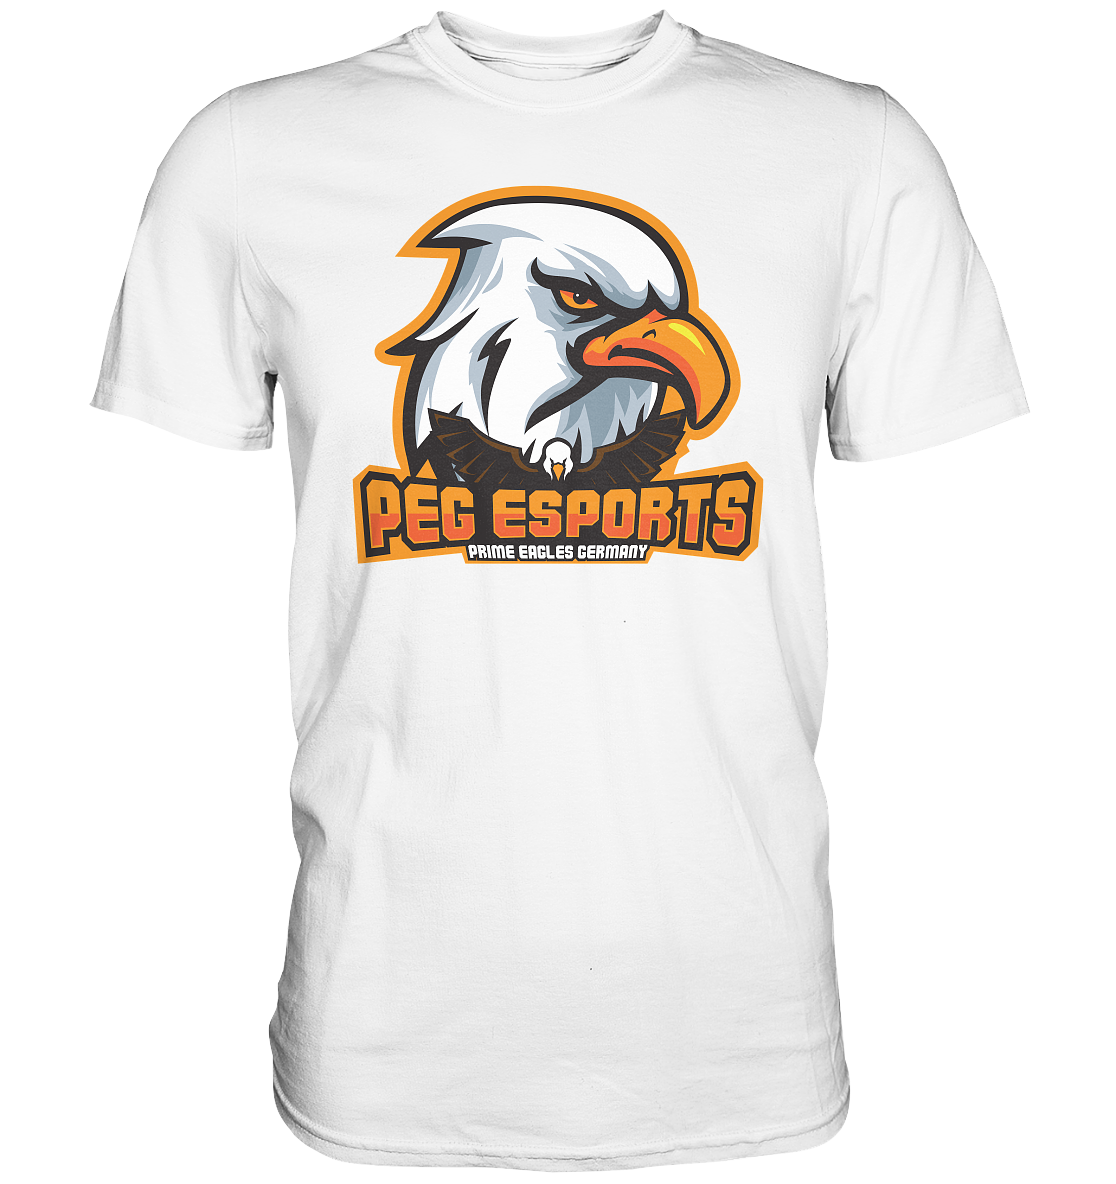 PEG ESPORTS - Basic Shirt